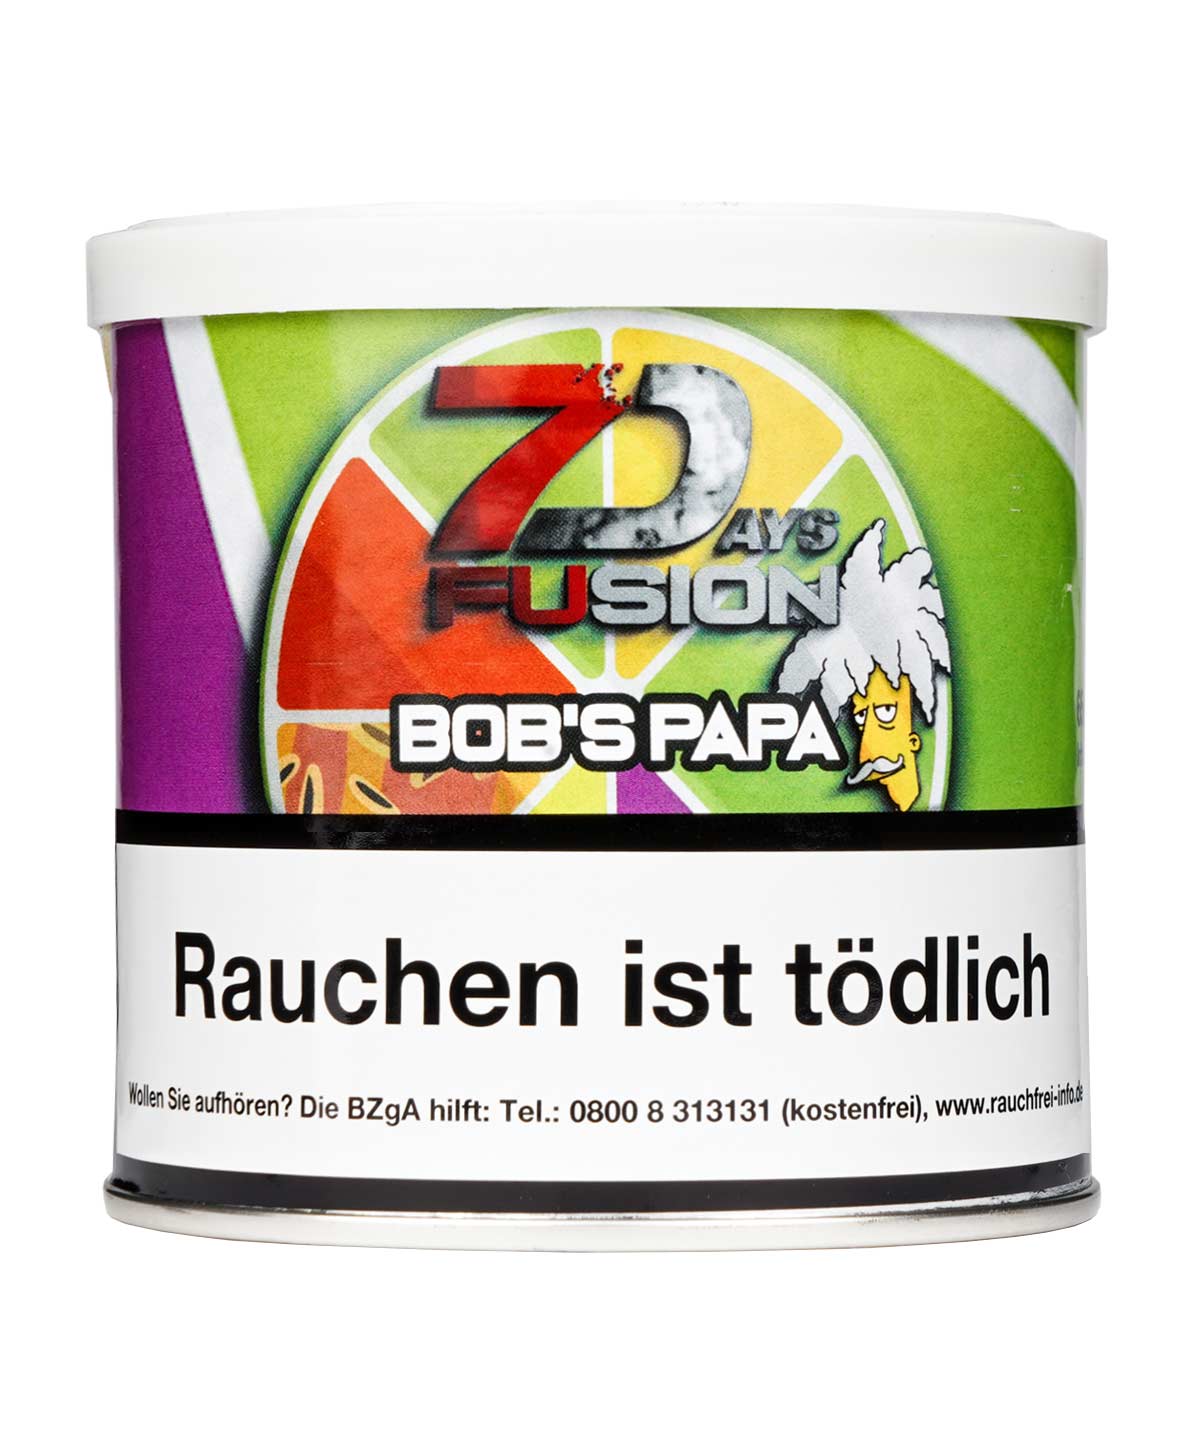 7 Days Fusion Pfeifentabak Bob's Papa 65g Pfeifentabak